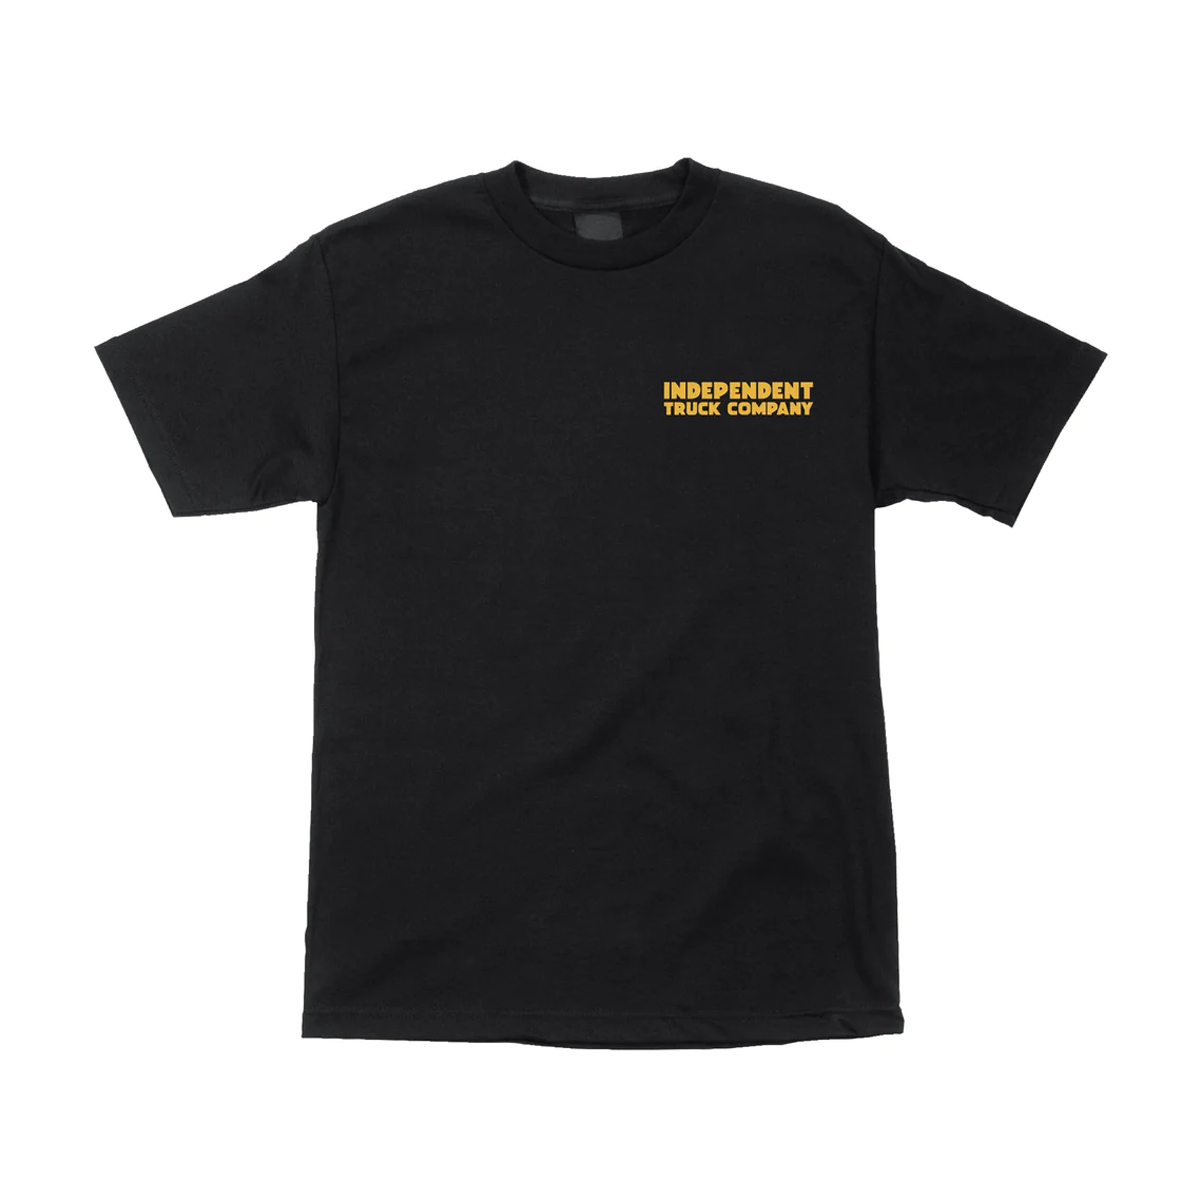 Independent Youth Original 78 T-Shirt - Black